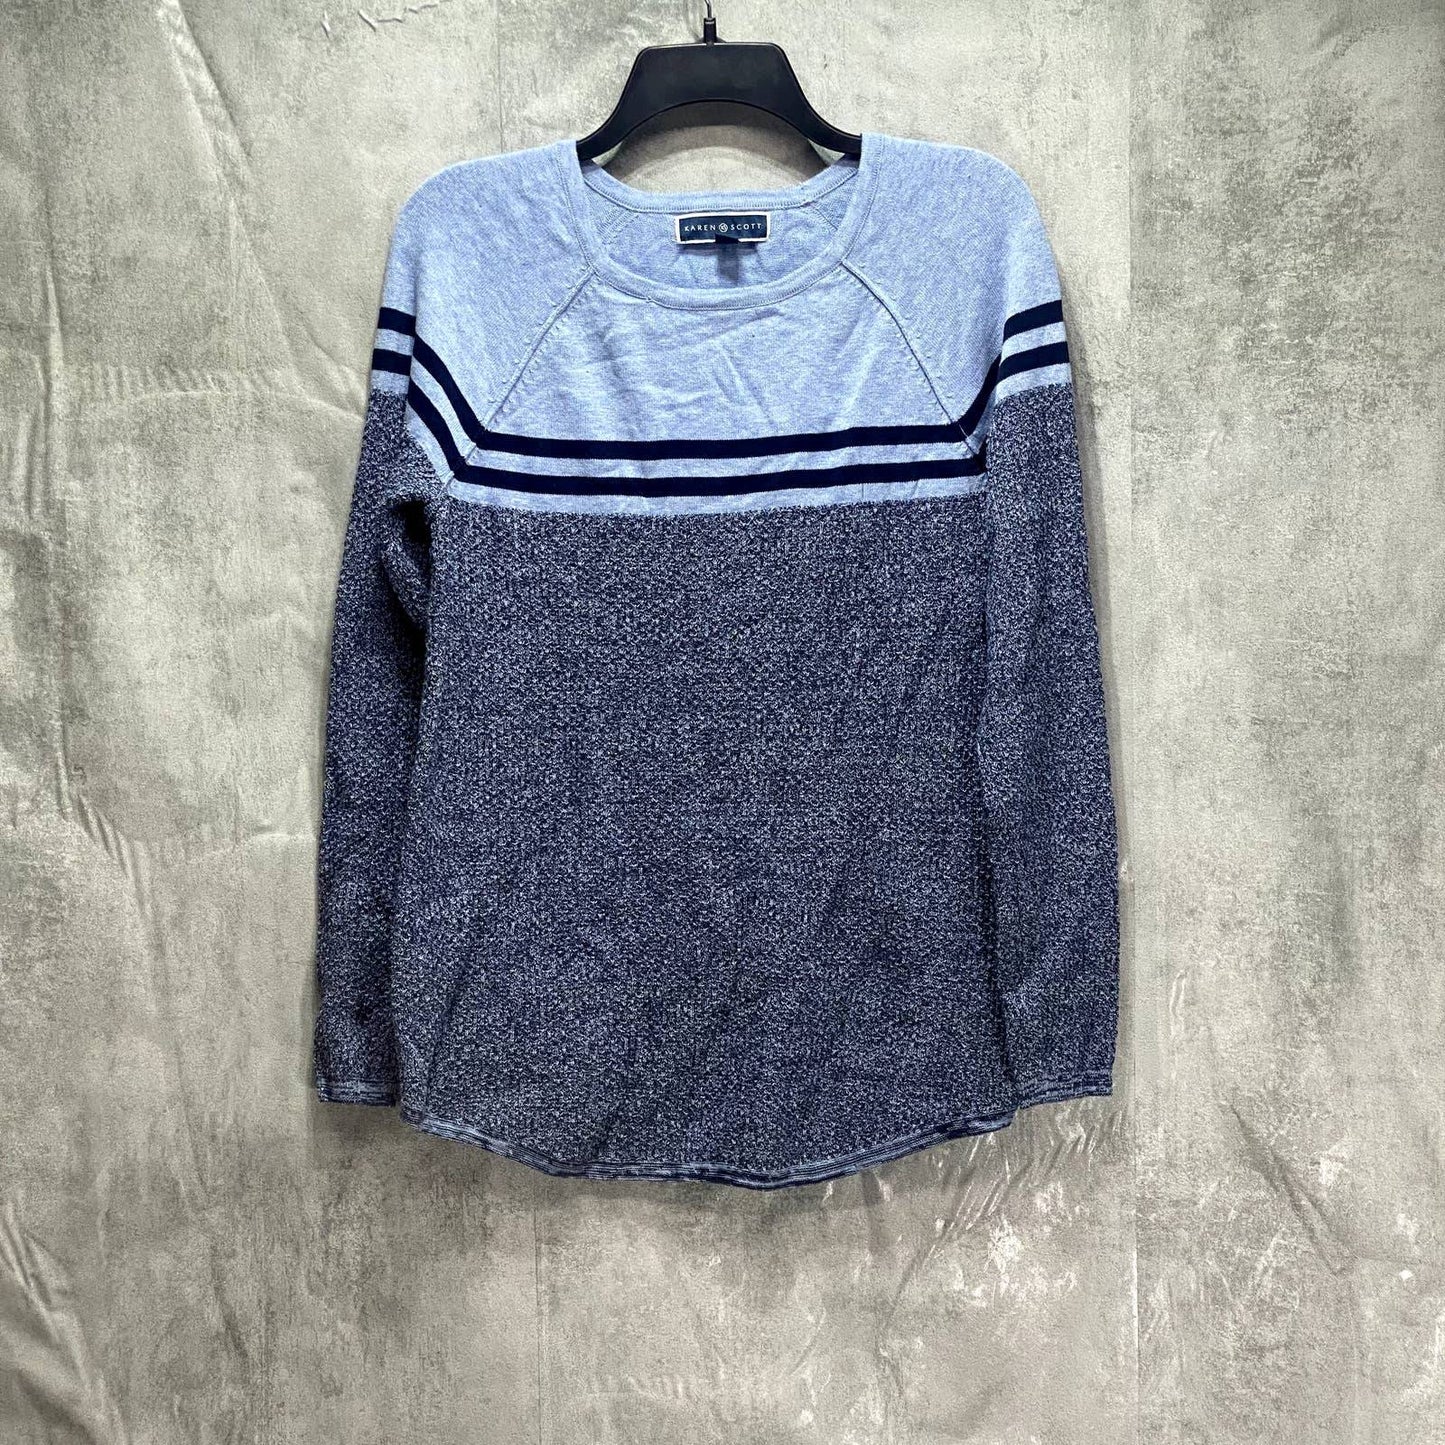 KAREN SCOTT Blue Marisa Cotton Colorblock Textured Curve-Hem Pullover Sweater SZ S